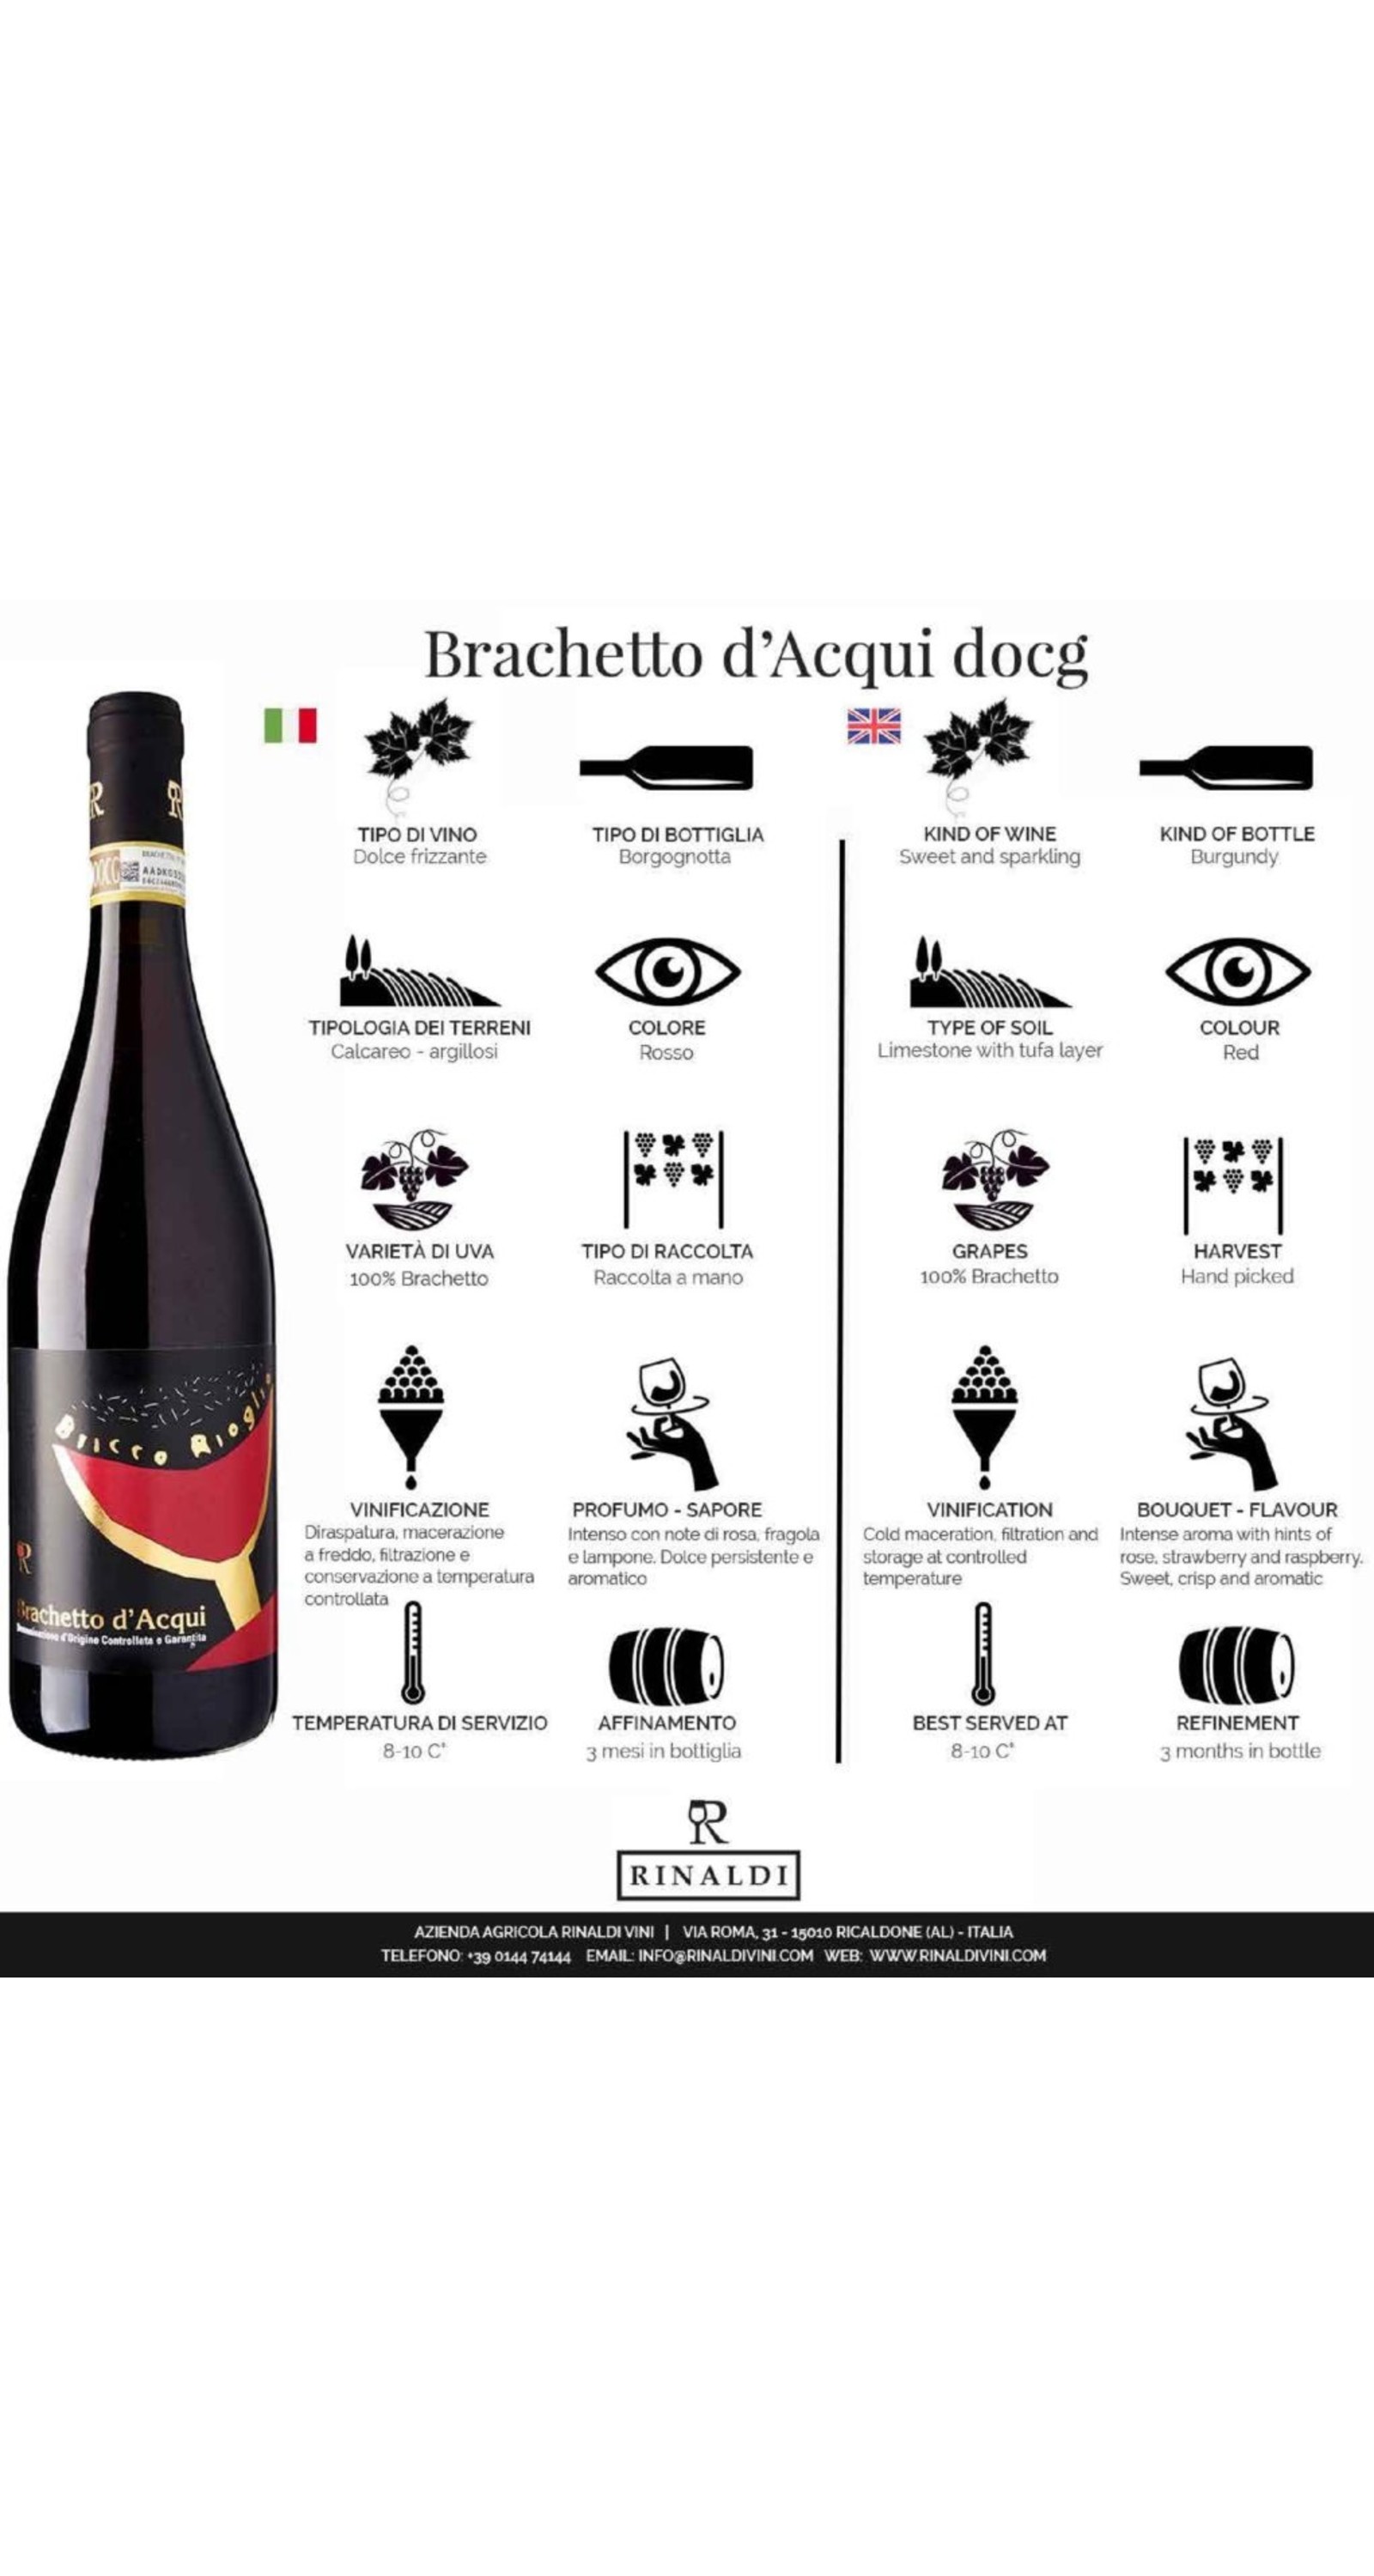 Rinaldi Piemonte Wijnen Brachetto d'Acqui DOCG 2017 750 ml